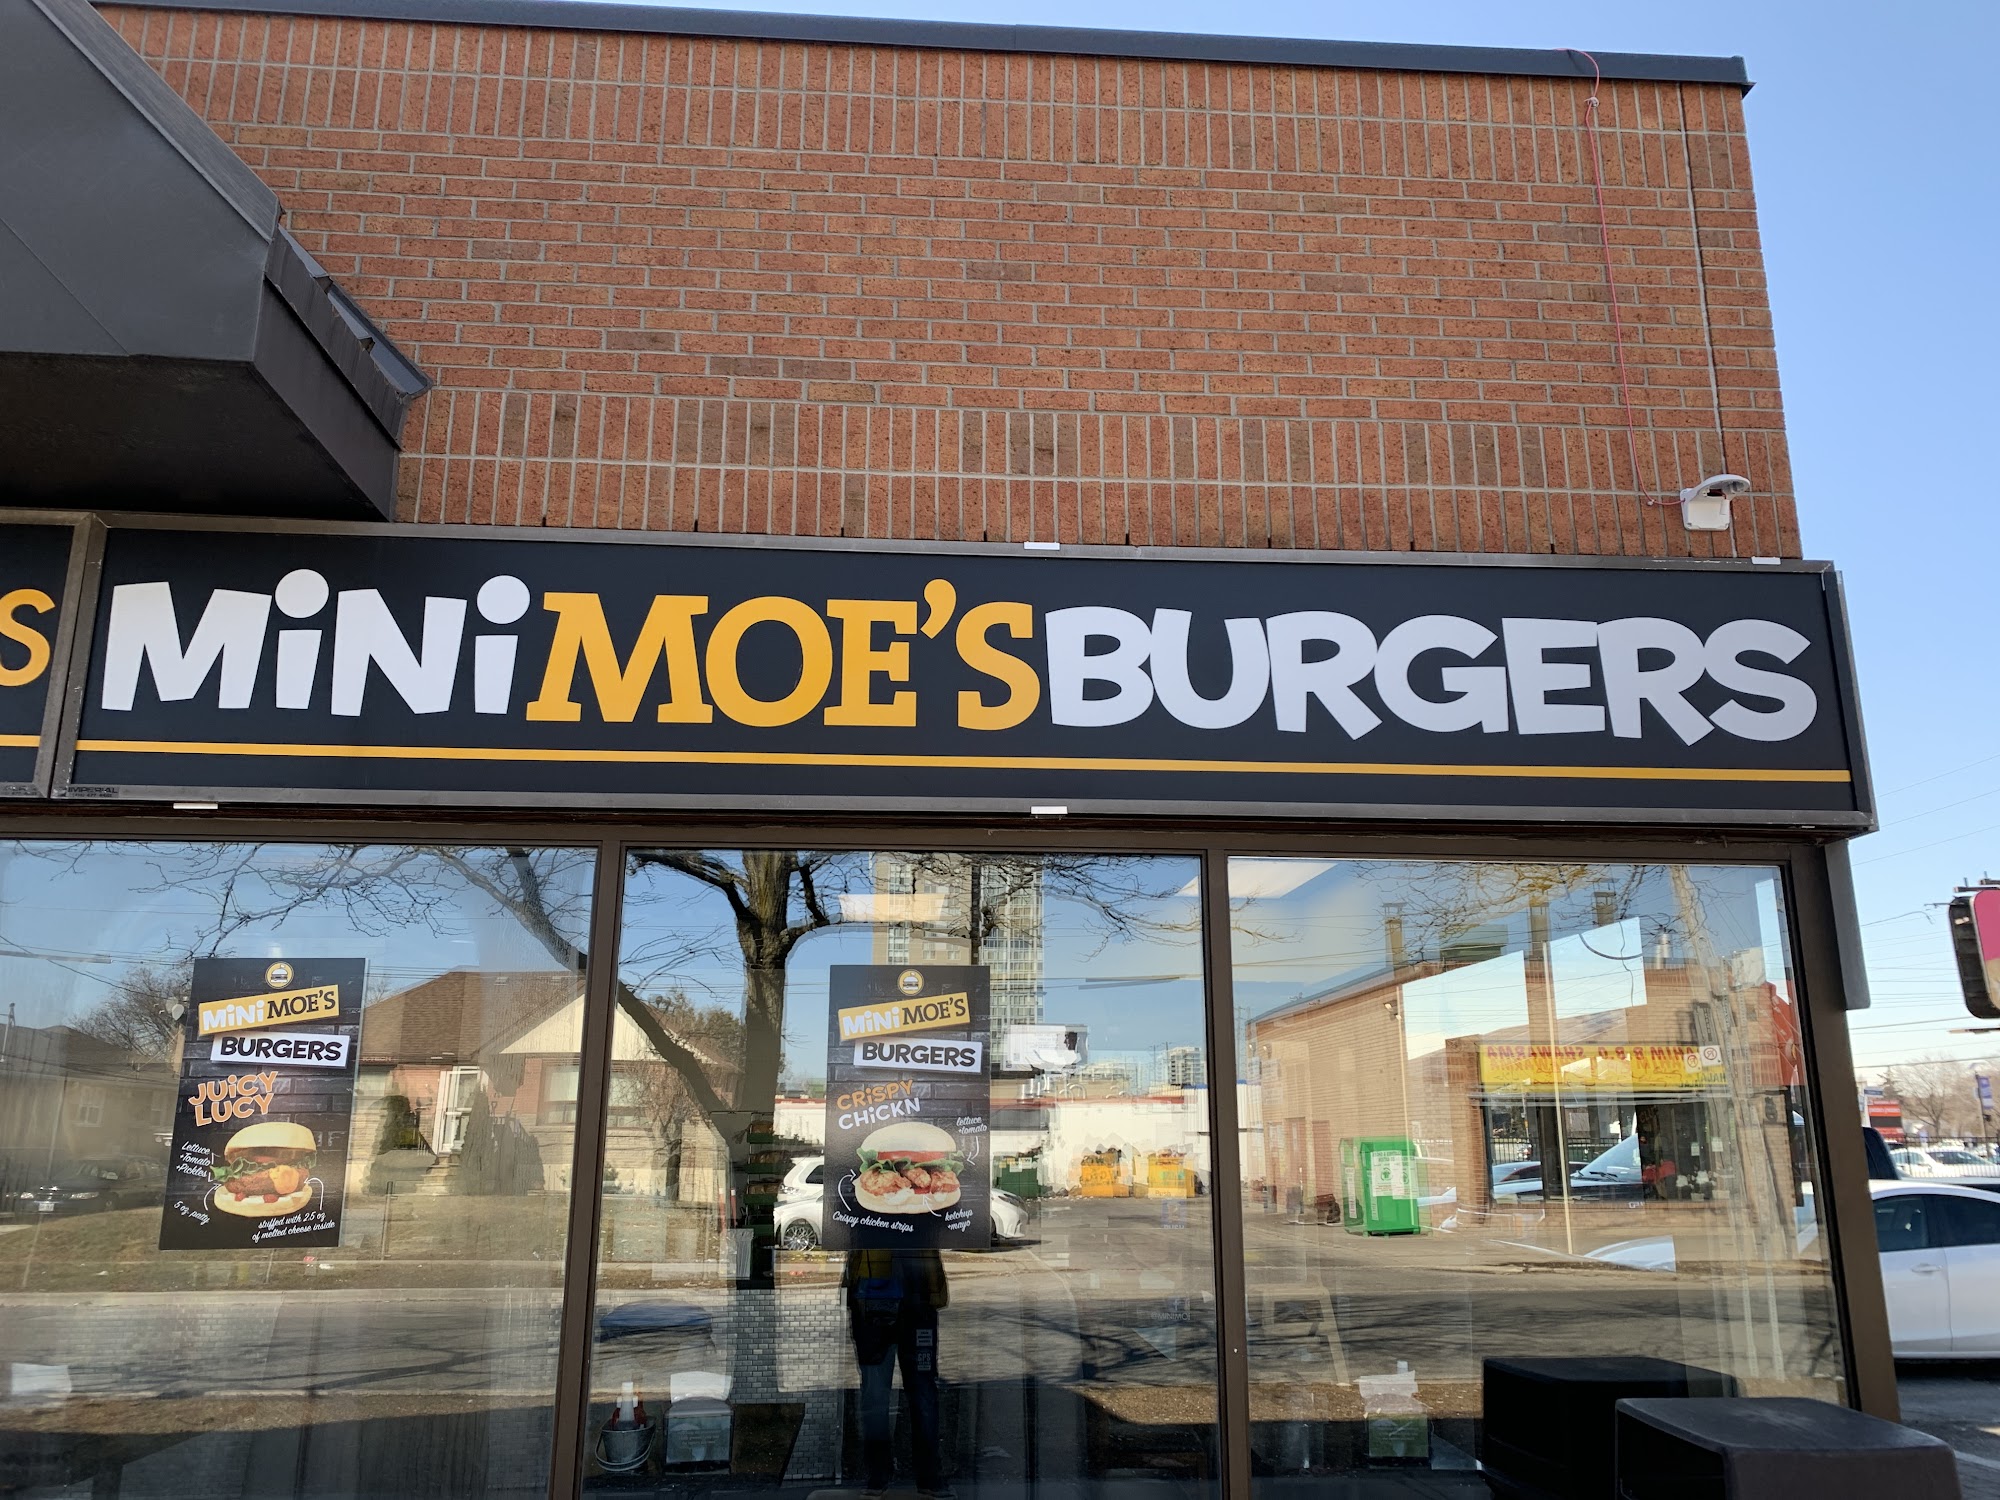 Mini Moe’s Burgers - Wraps - Funnel Cakes - Poutines